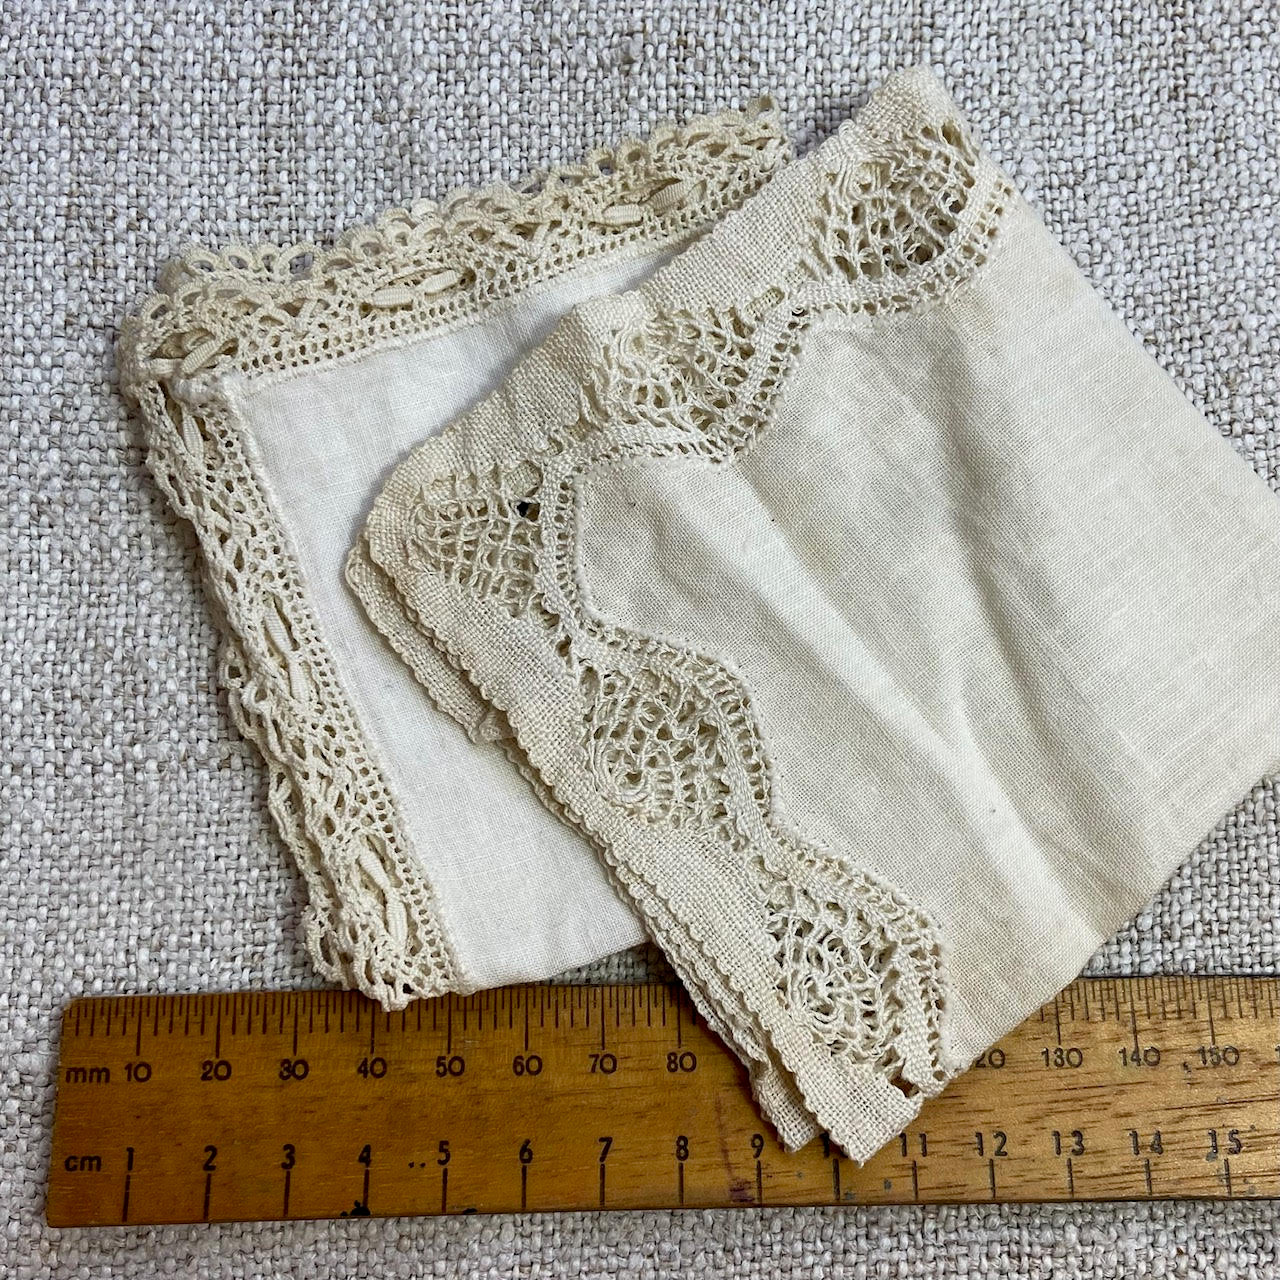 Pair of Handkerchiefs - Item 23564